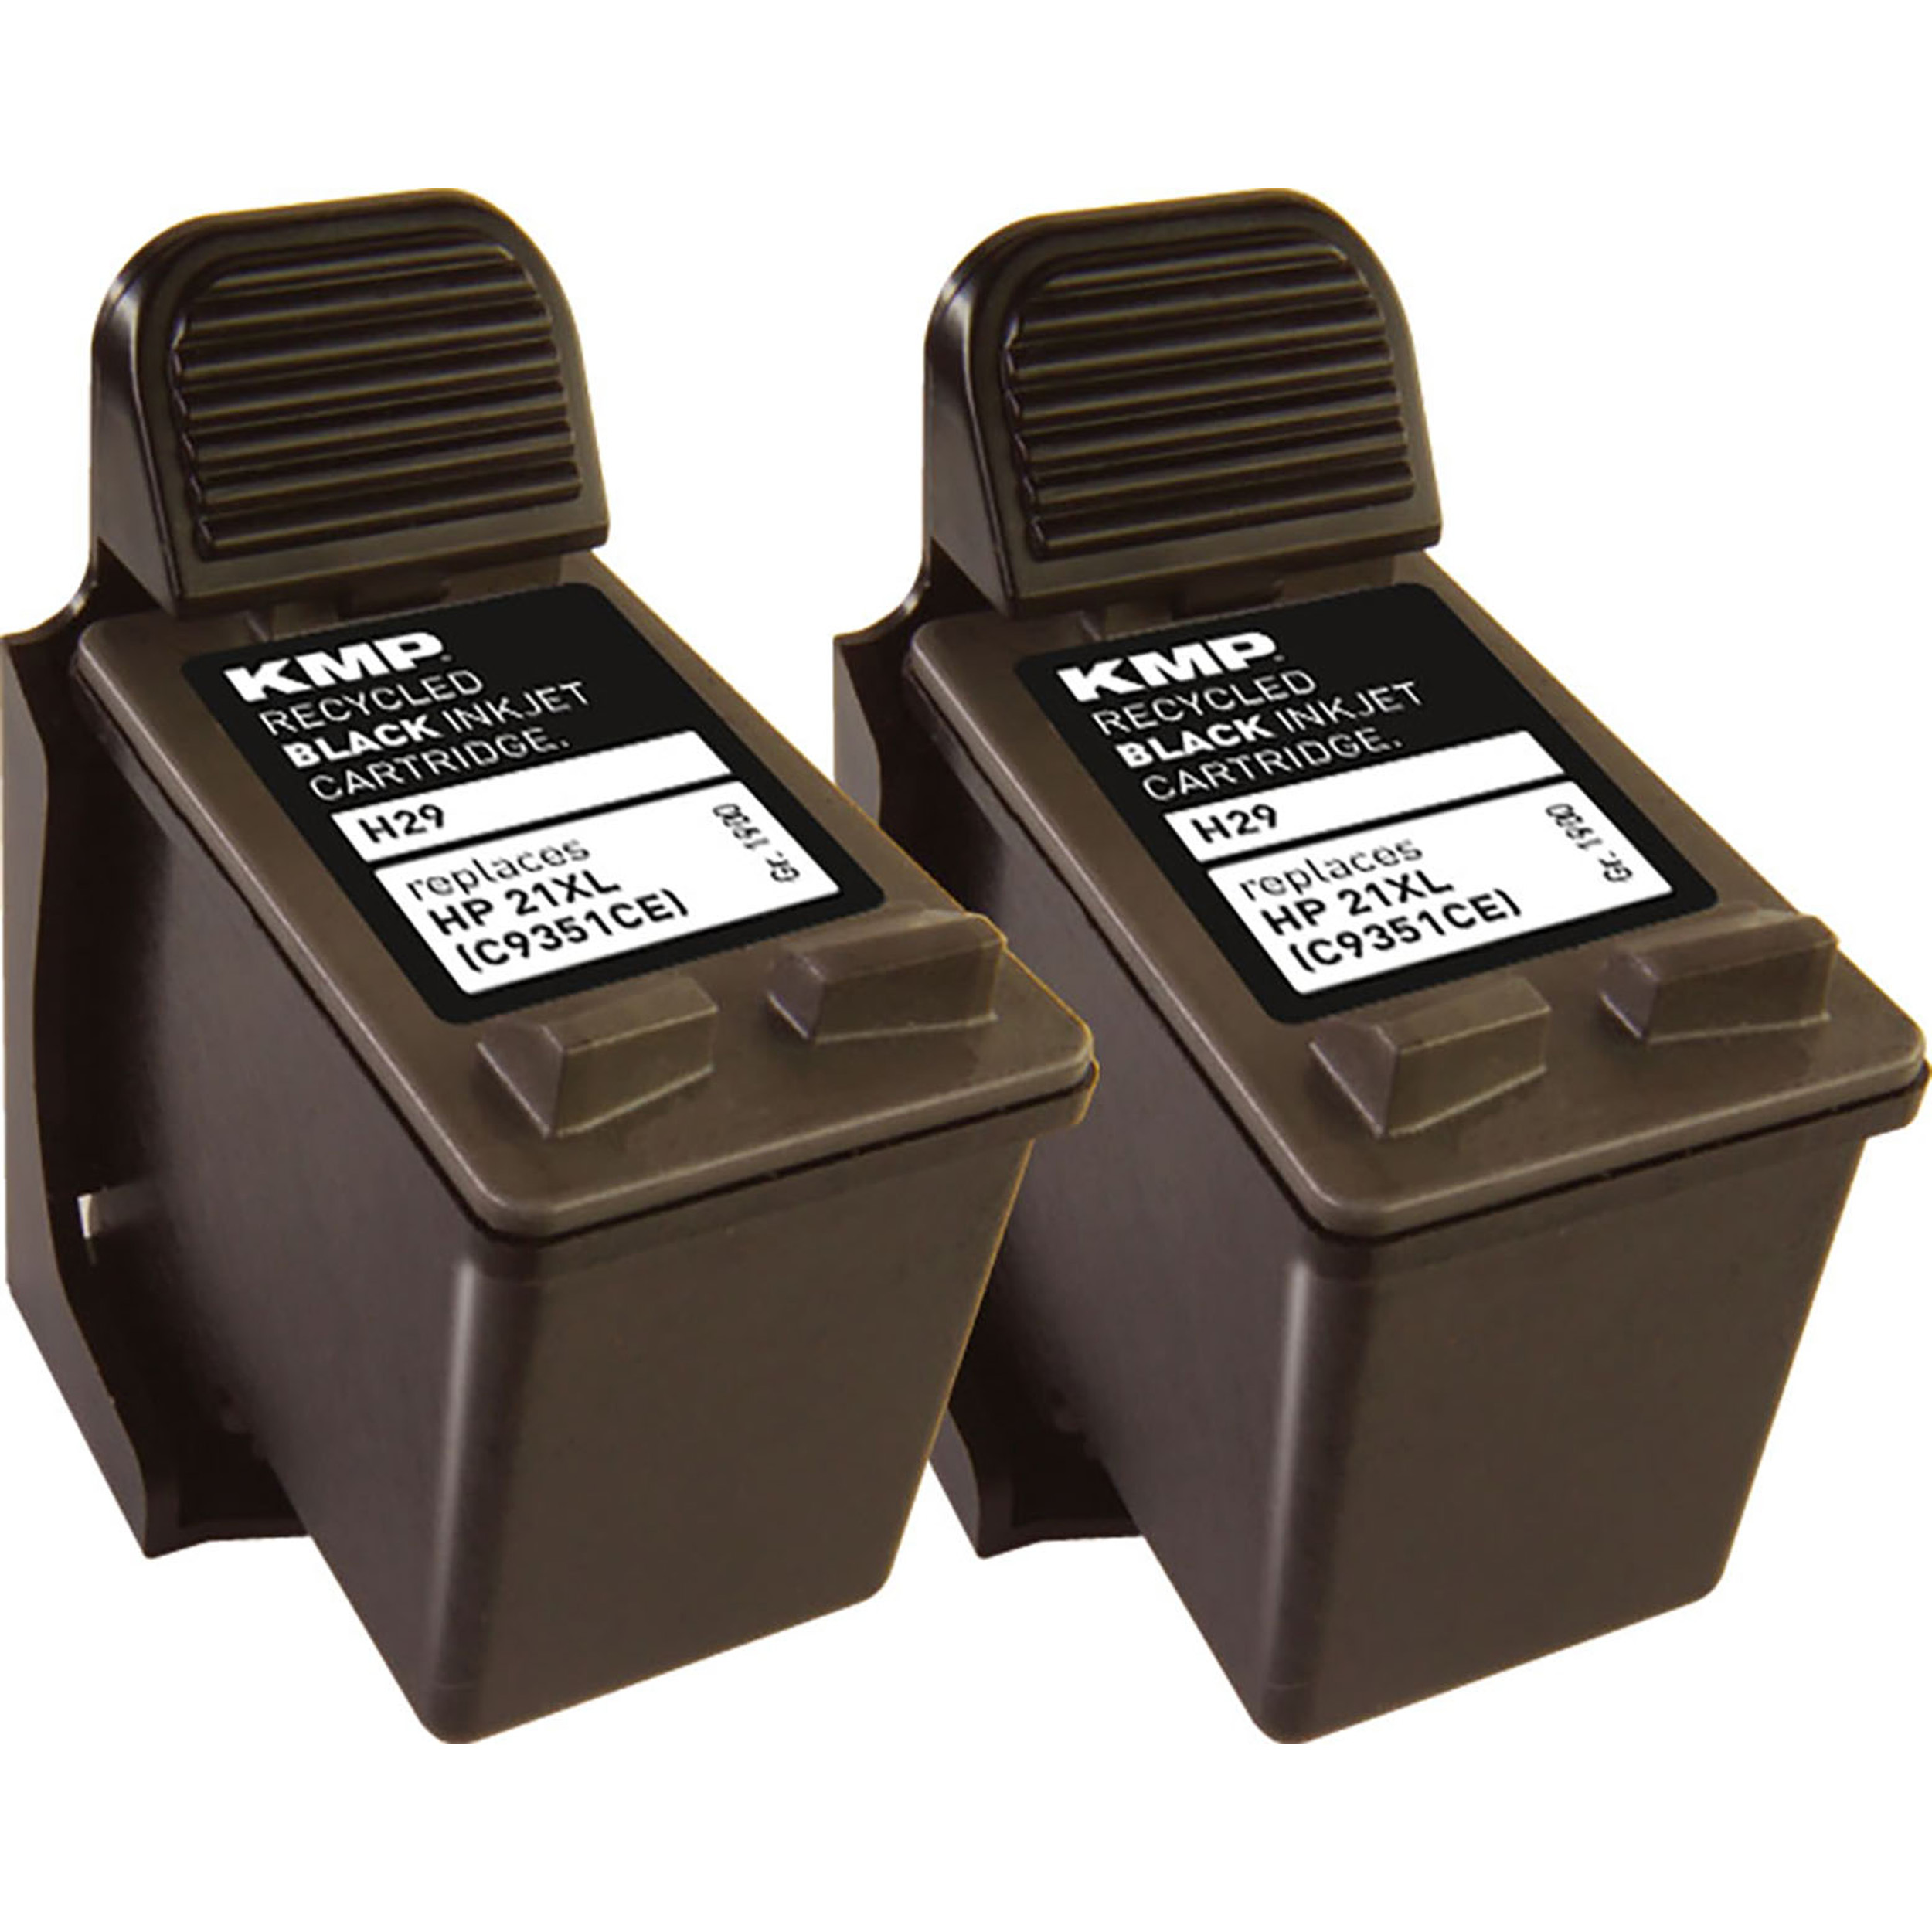 KMP Cartridge für (C9351CE) Ink schwarz 21XL Doublepack (C9351CE) HP Tintenpatrone Black